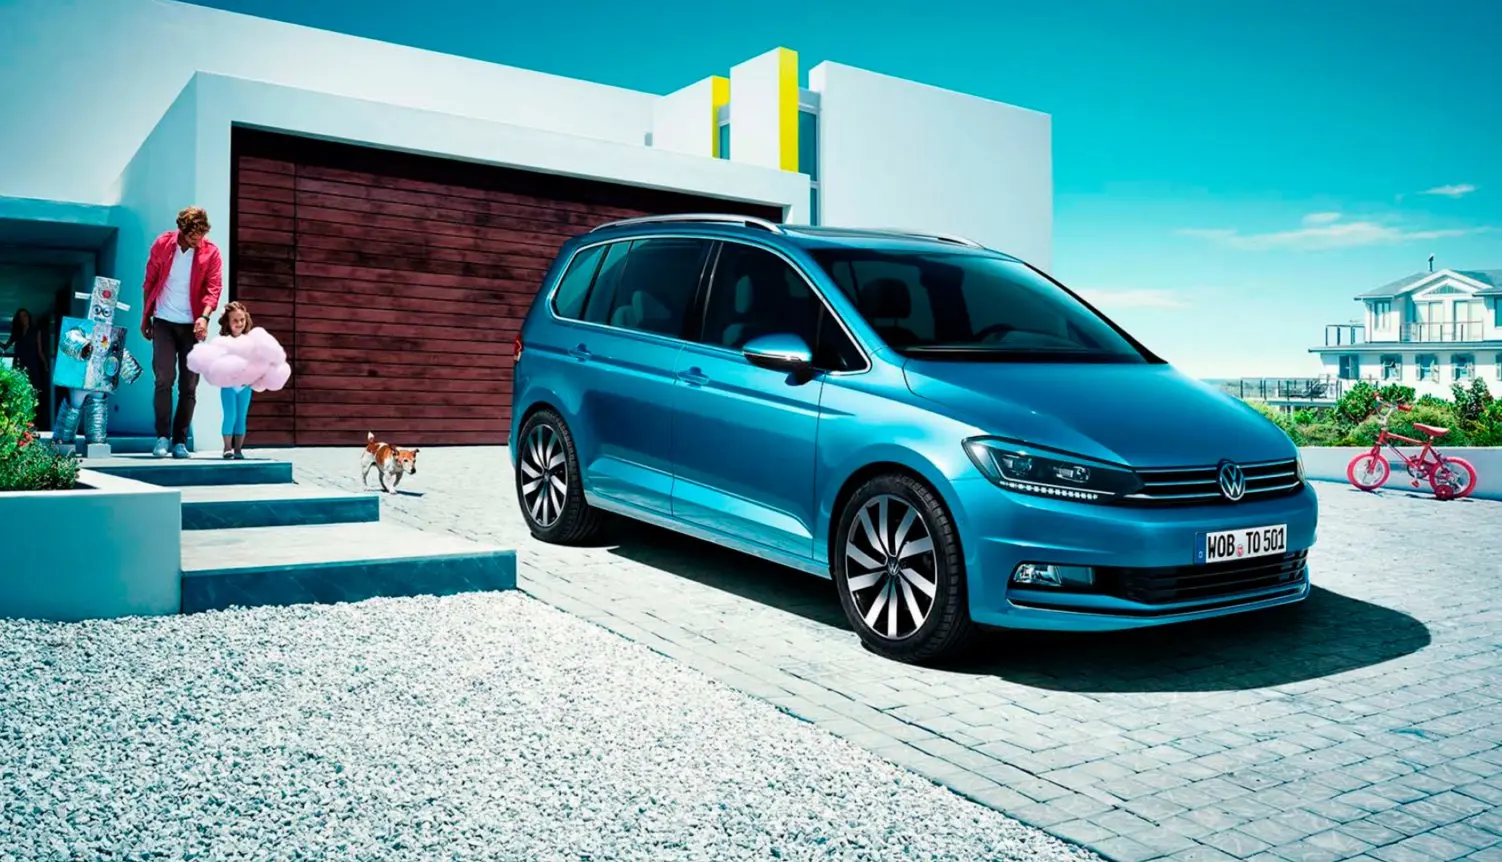 Volkswagen Touran Un Monovolumen Para Toda la Familia